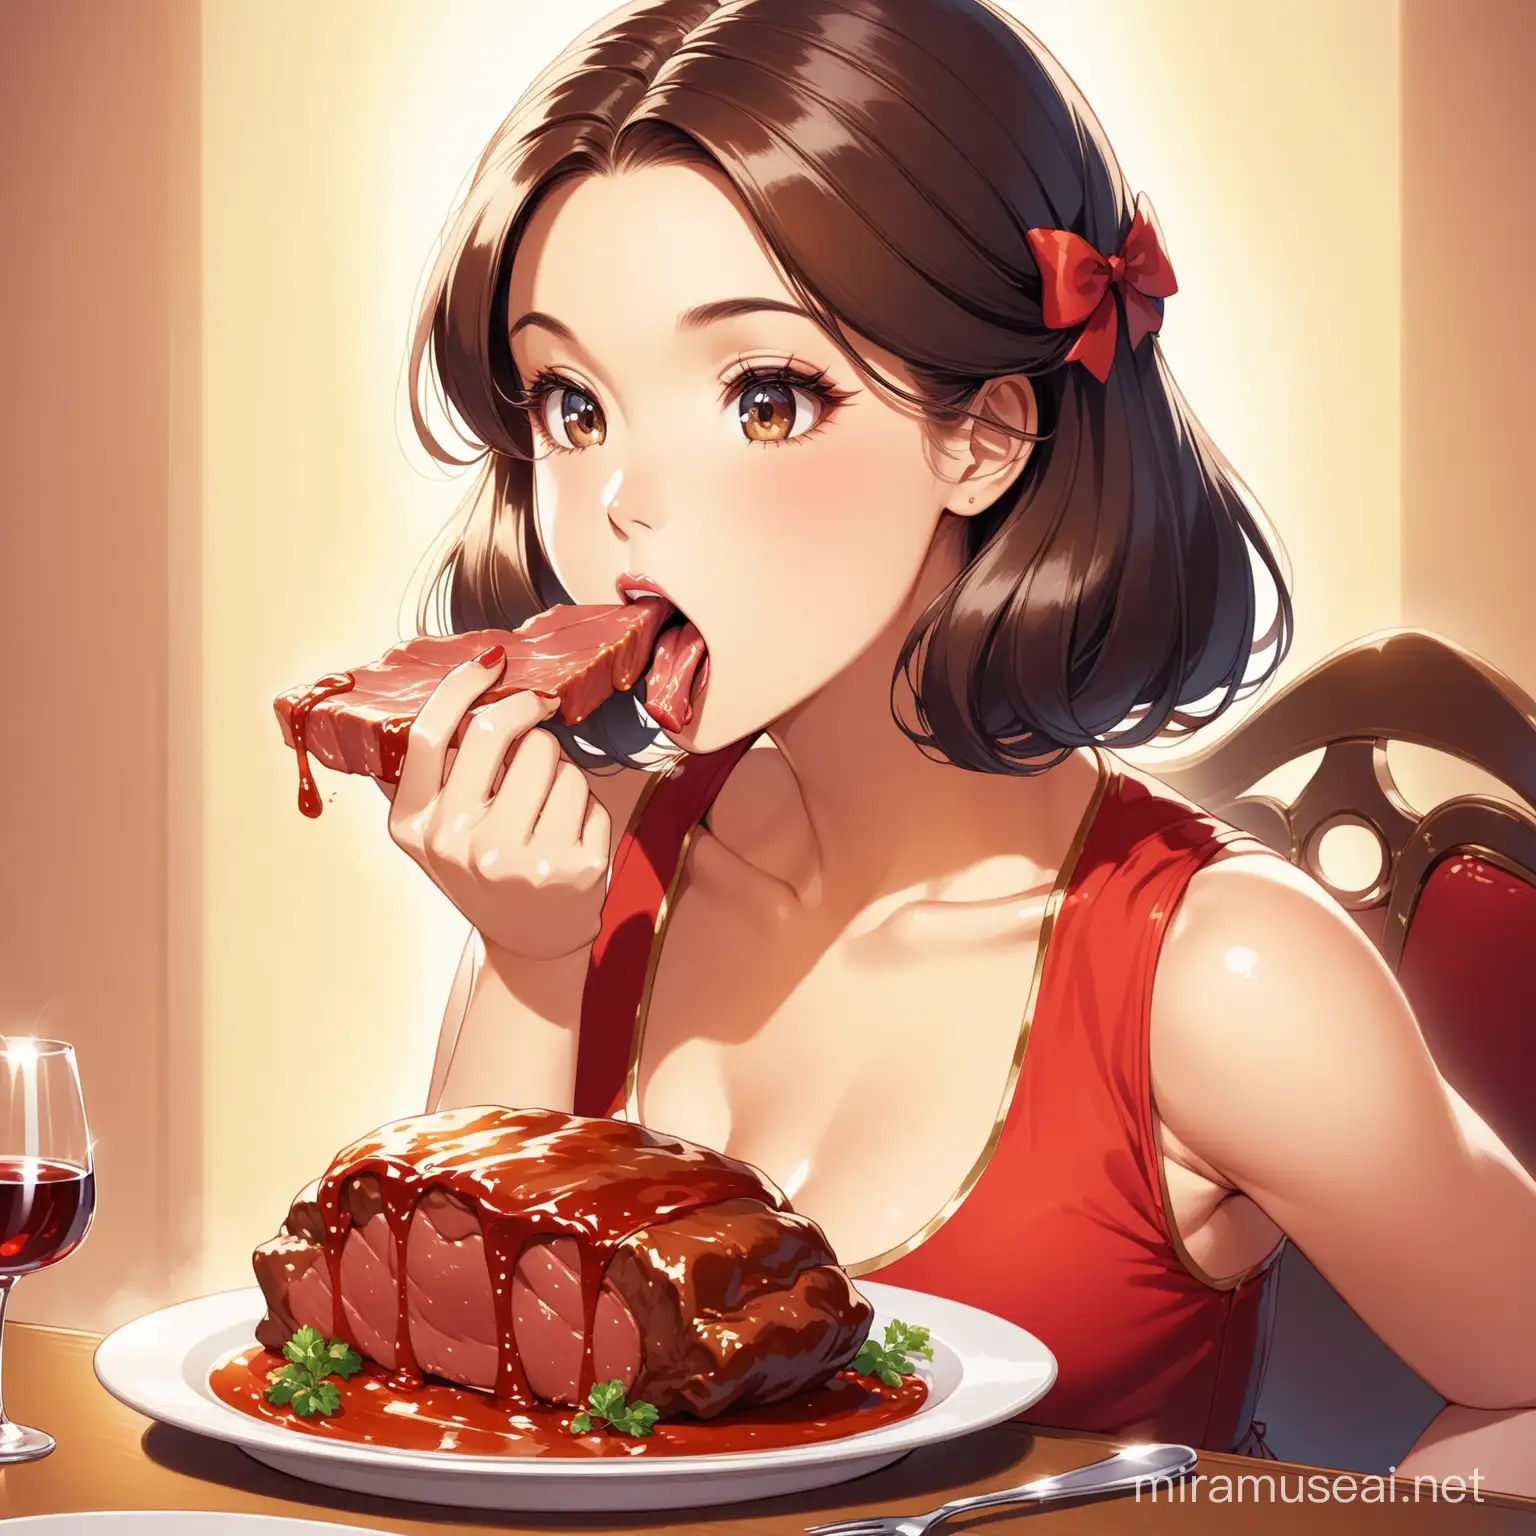 Elegant Woman Enjoying a Savory Meal